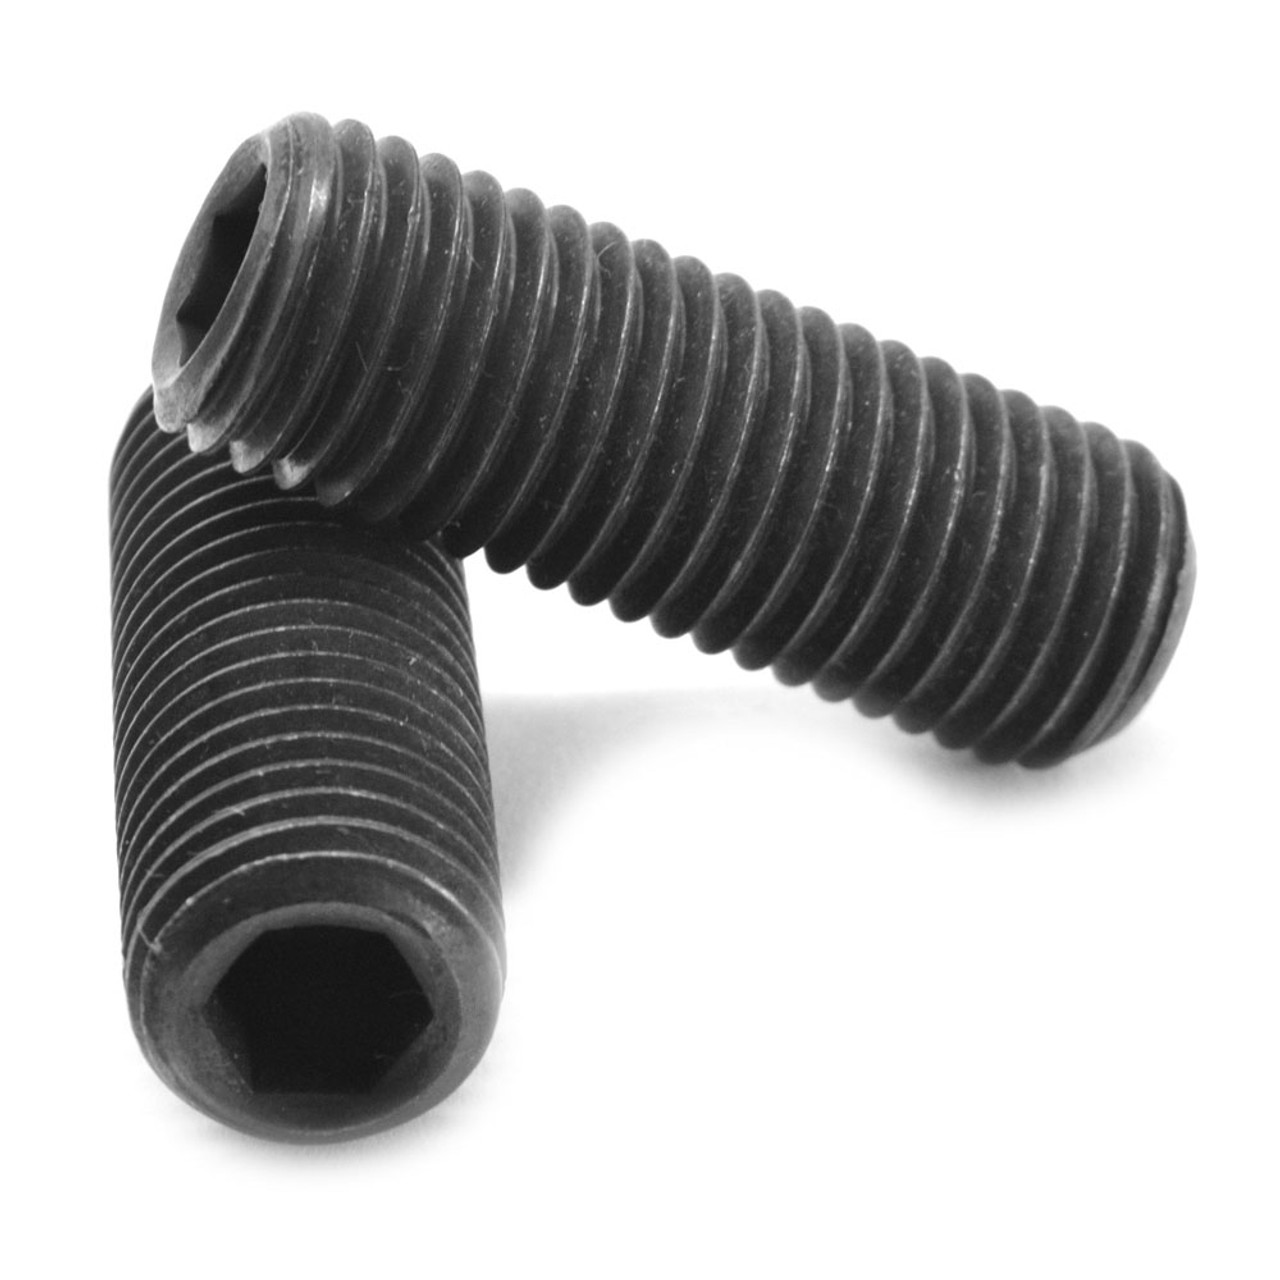 M24 x 3.00 x 50 MM Coarse Thread ISO 4029 / DIN 916 Class 45H Socket Set Screw Cup Point Alloy Steel Black Oxide